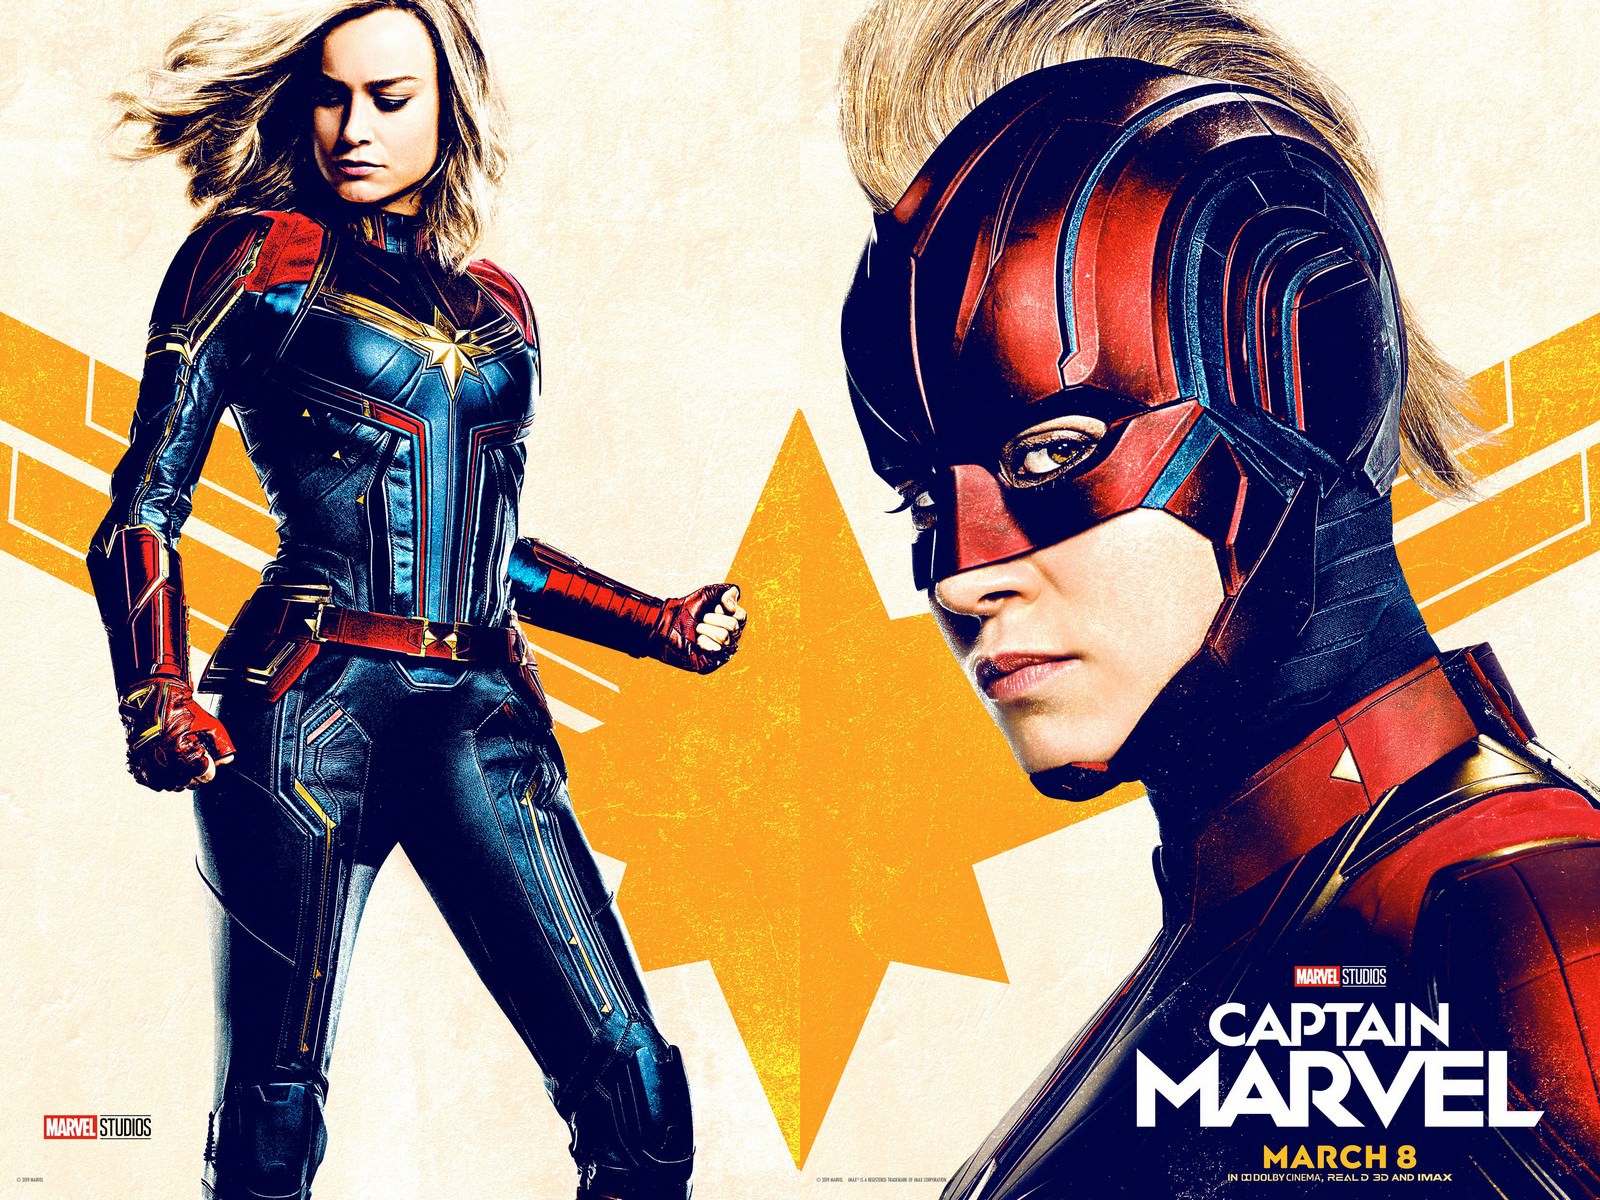 Movie, Captain Marvel(美國, 2019年) / 驚奇隊長(台灣) / 惊奇队长(中國) / Marvel 隊長(香港), 電影海報, 美國, 橫版